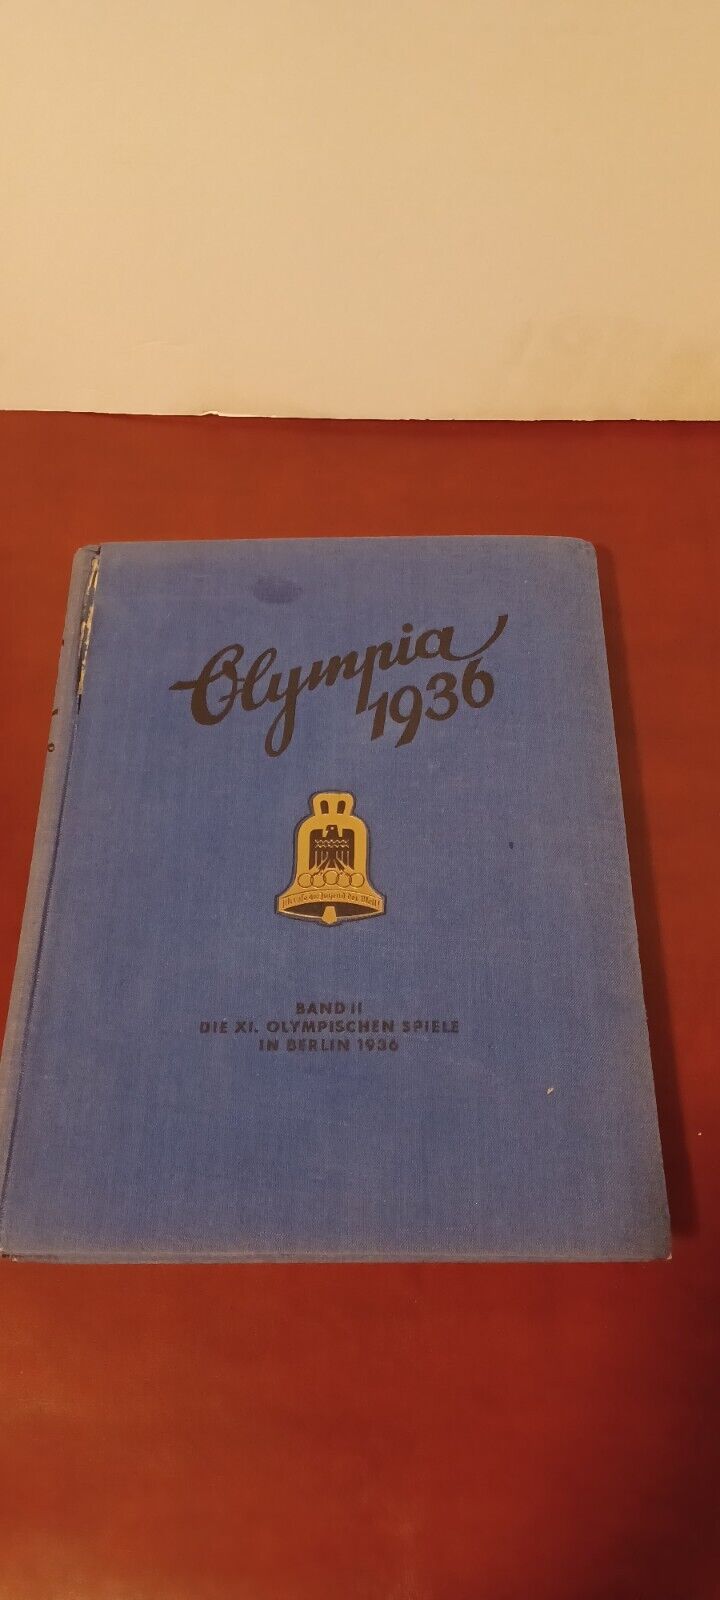  GERMAN OLYMPICS PHOTOS BOOK OLYMPIA 1936 BAND II 